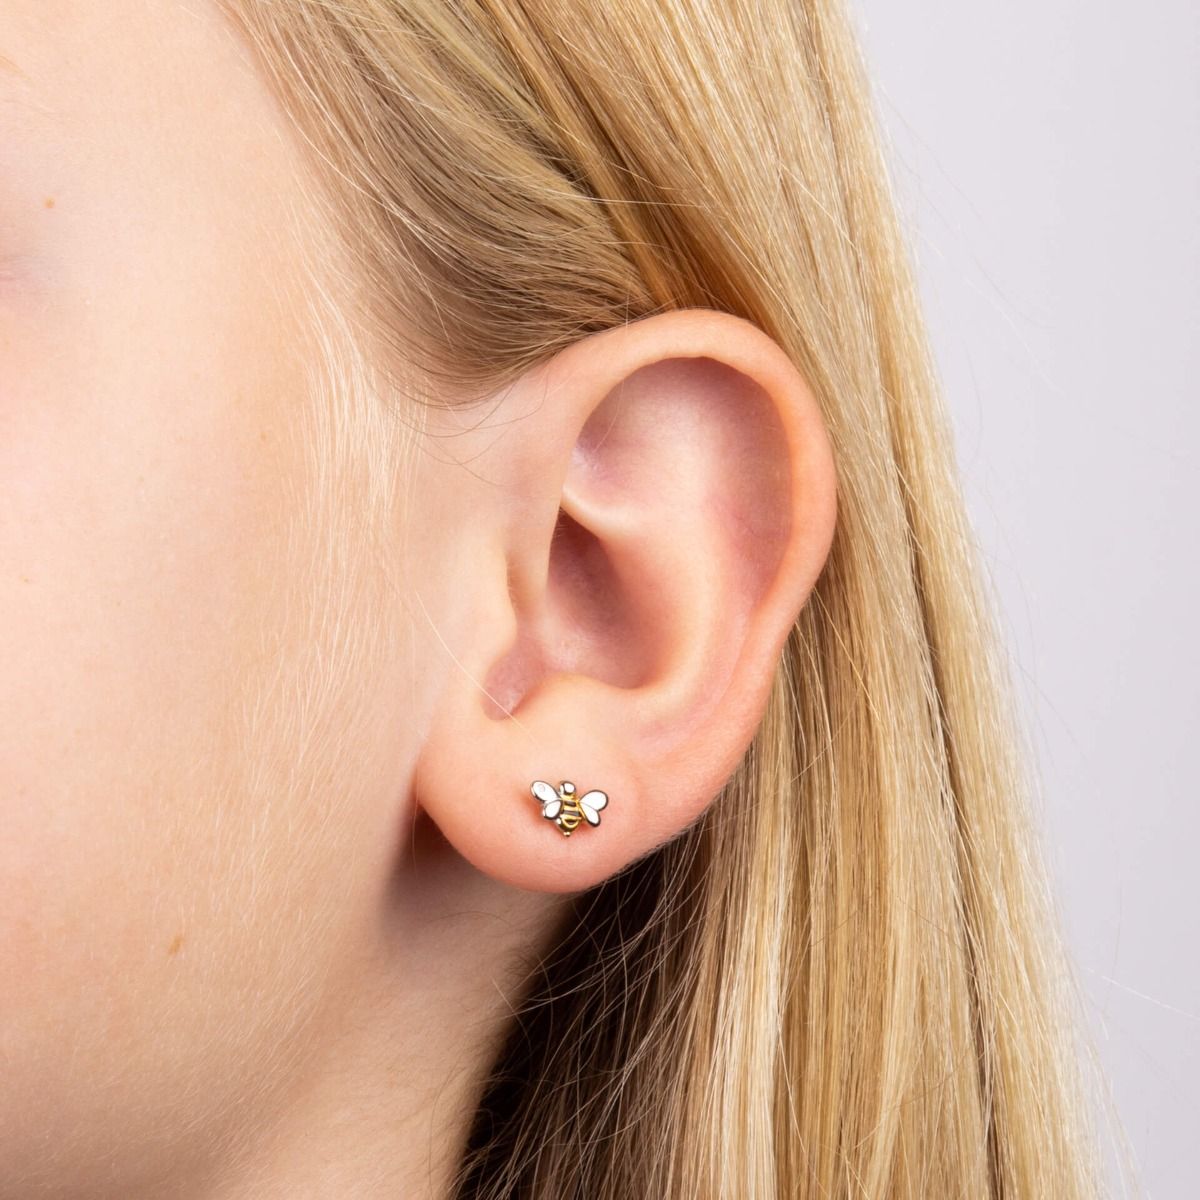 D for Diamond Bee stud earrings